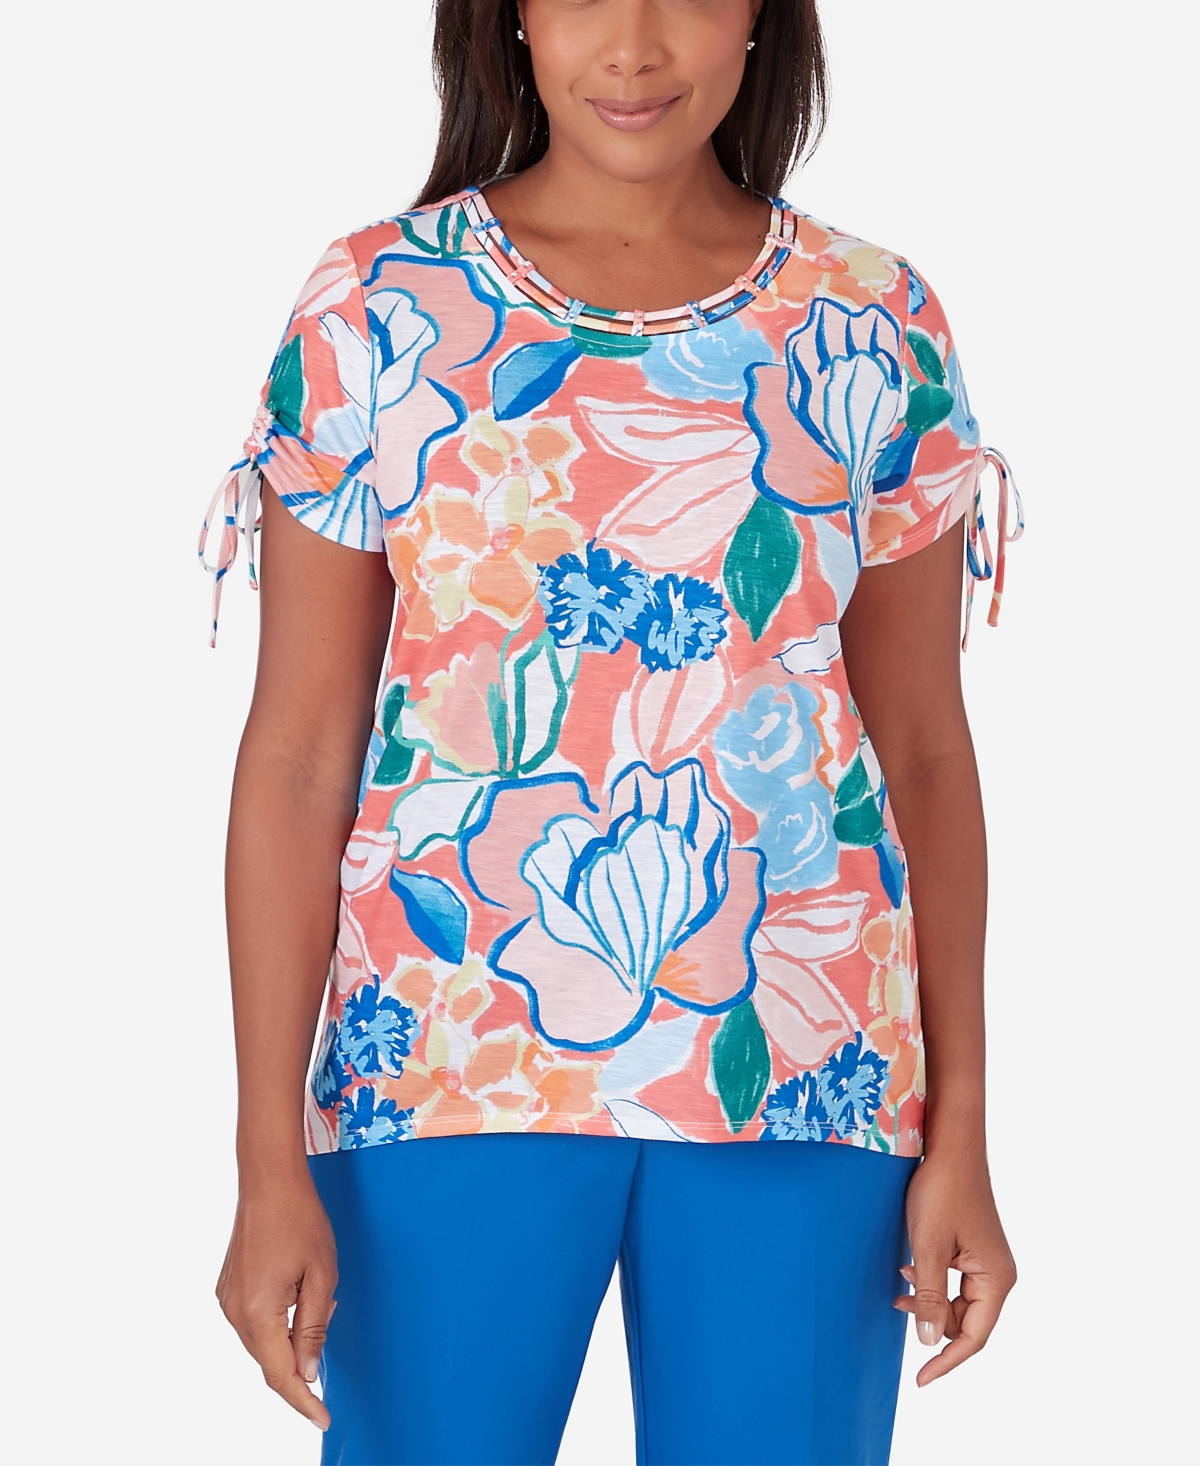 Petite Neptune Beach Whimsical Floral Print Tie Sleeve Top - Coral